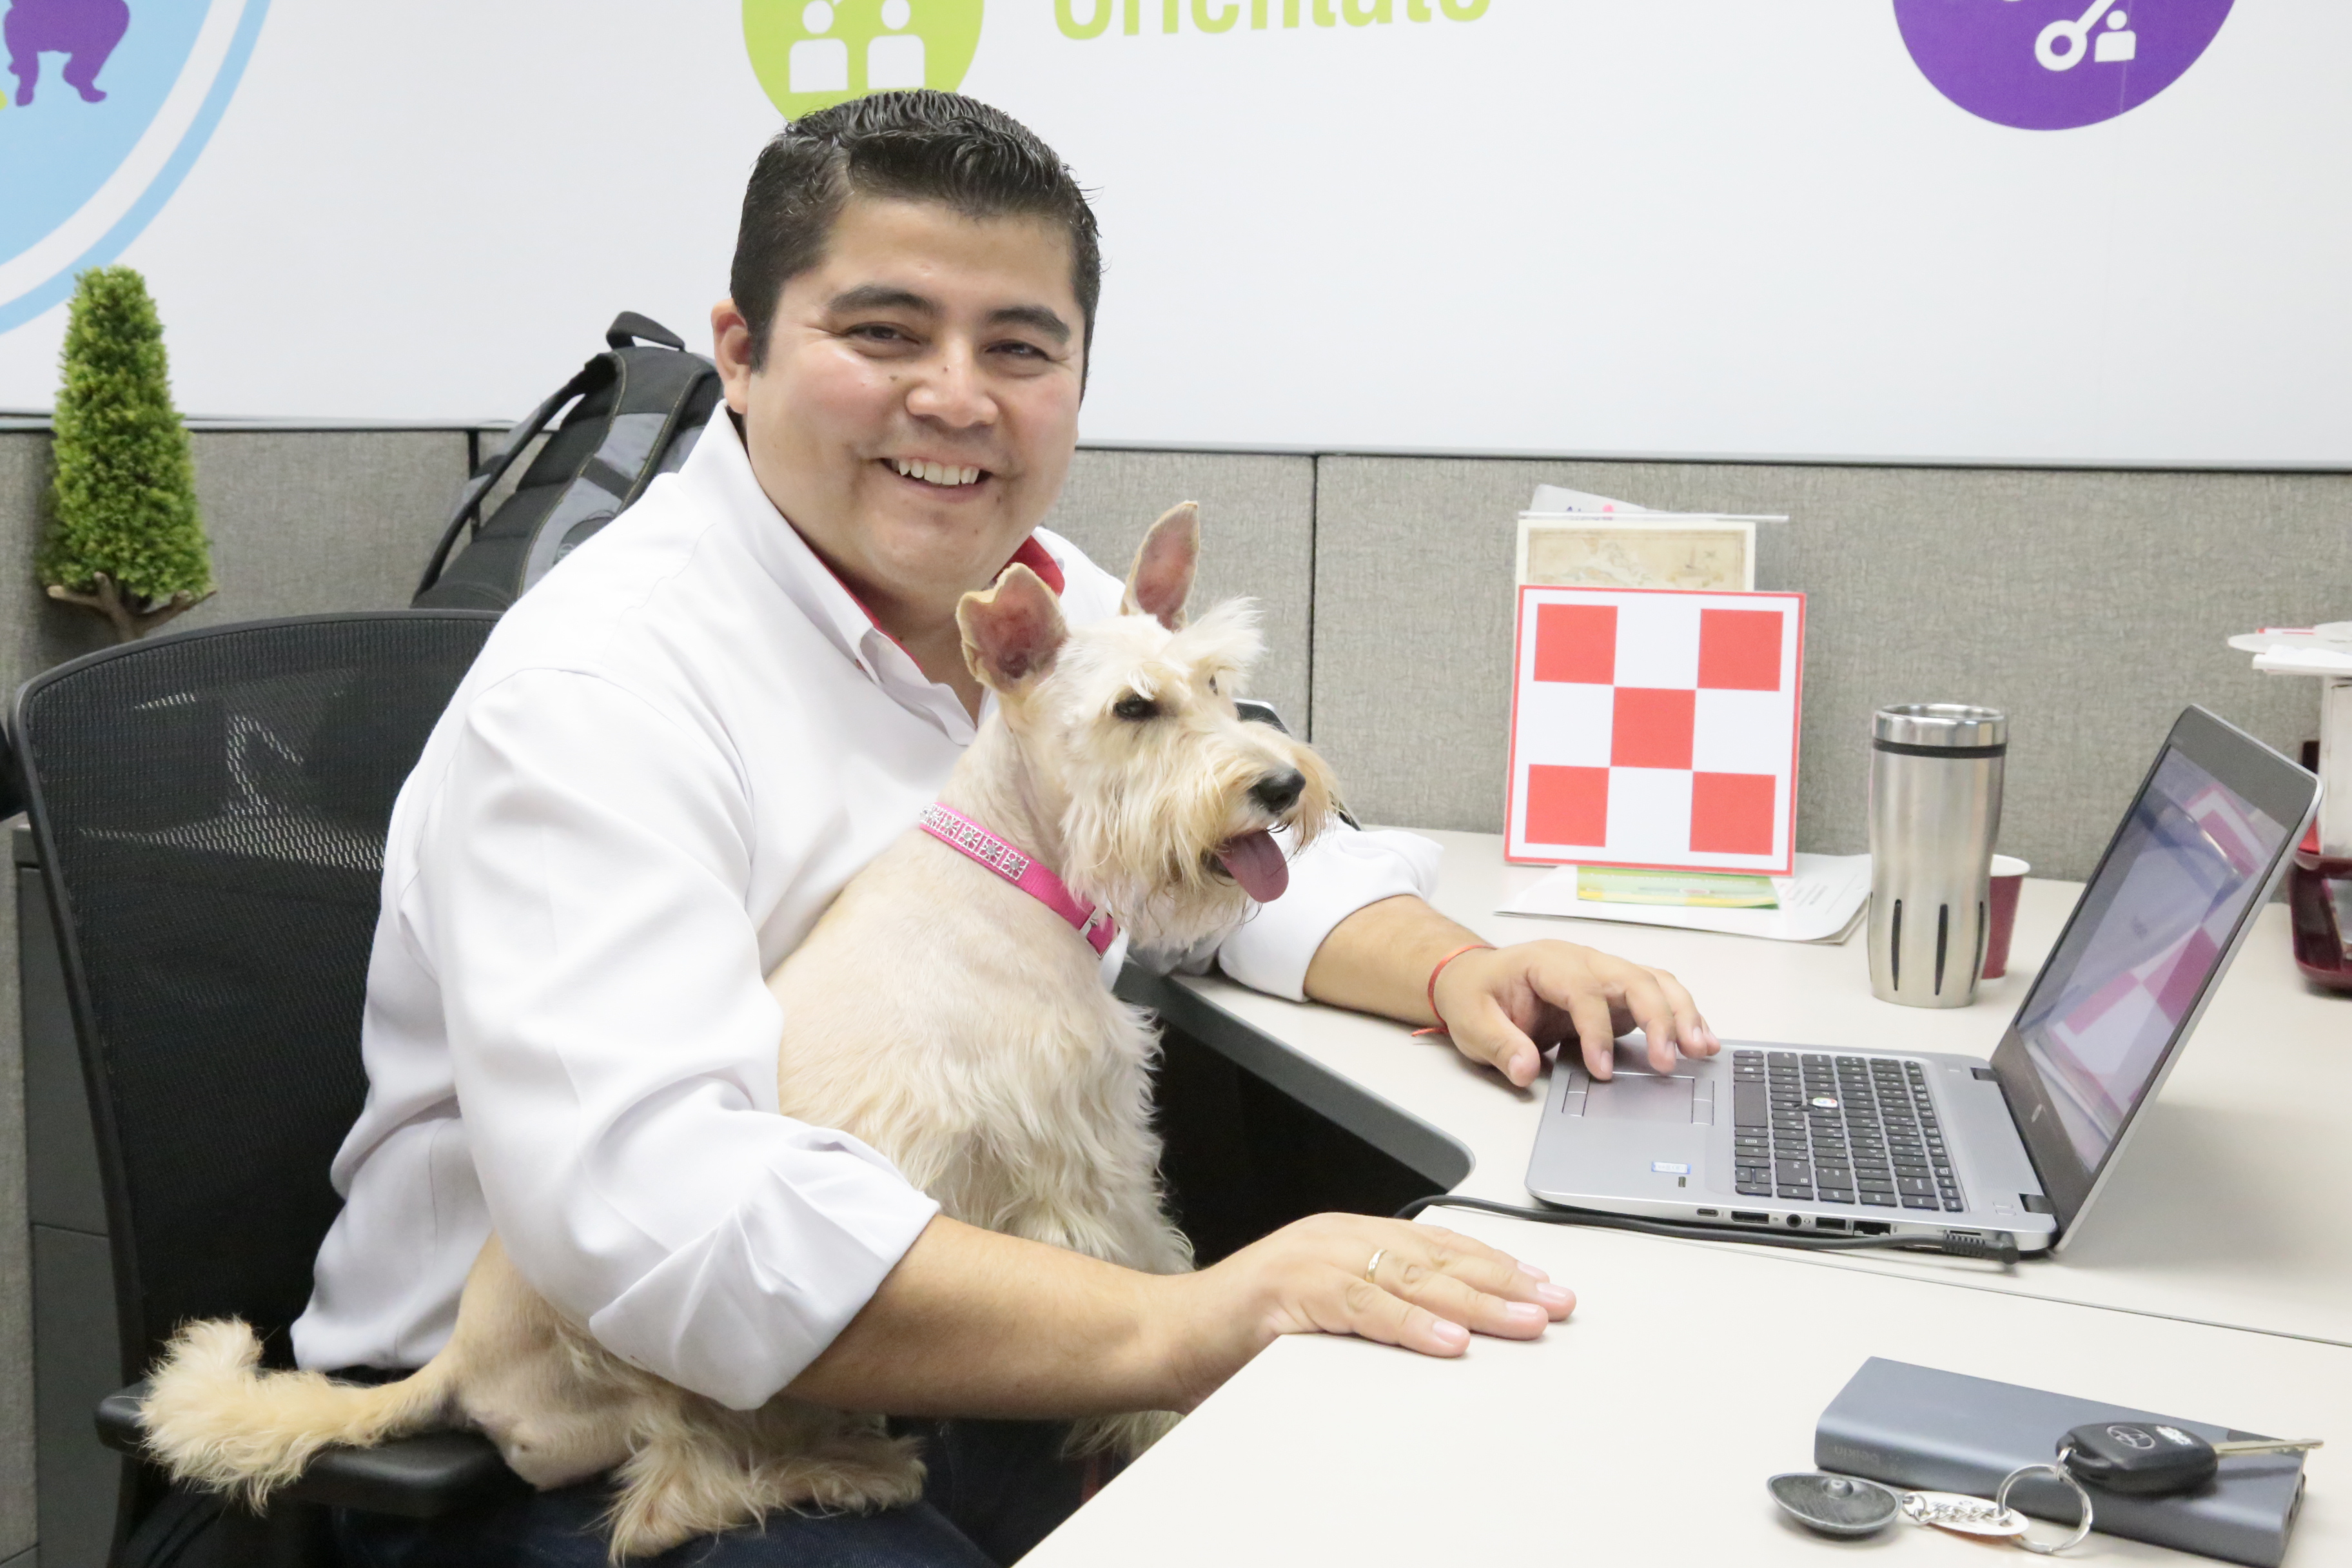  Nestlé Purina promueve llevar mascotas a la oficina